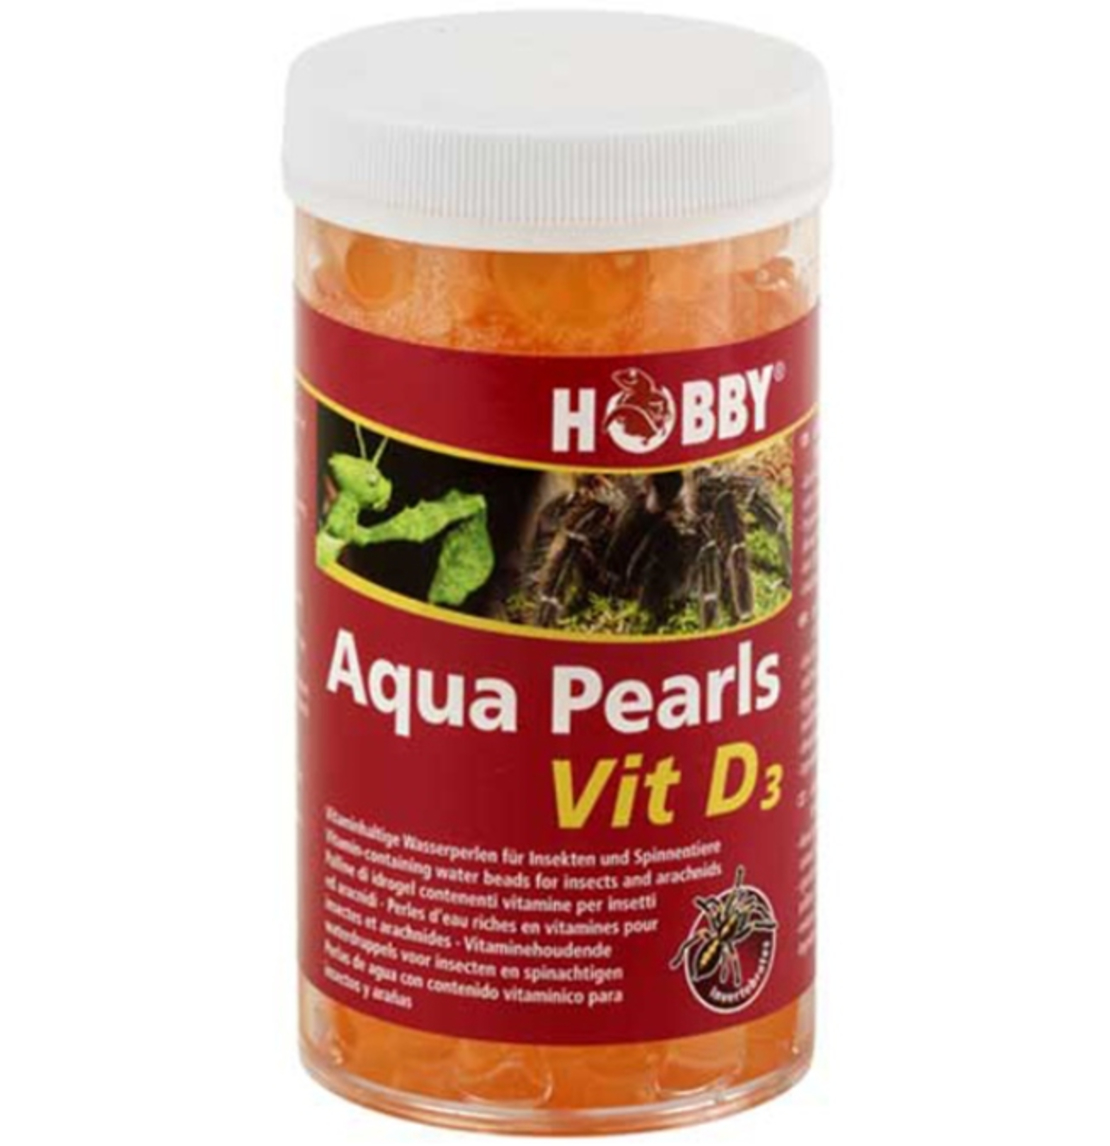 Aqua Pearls Vit D3 | תוסף ויטמין D3 לזוחלים